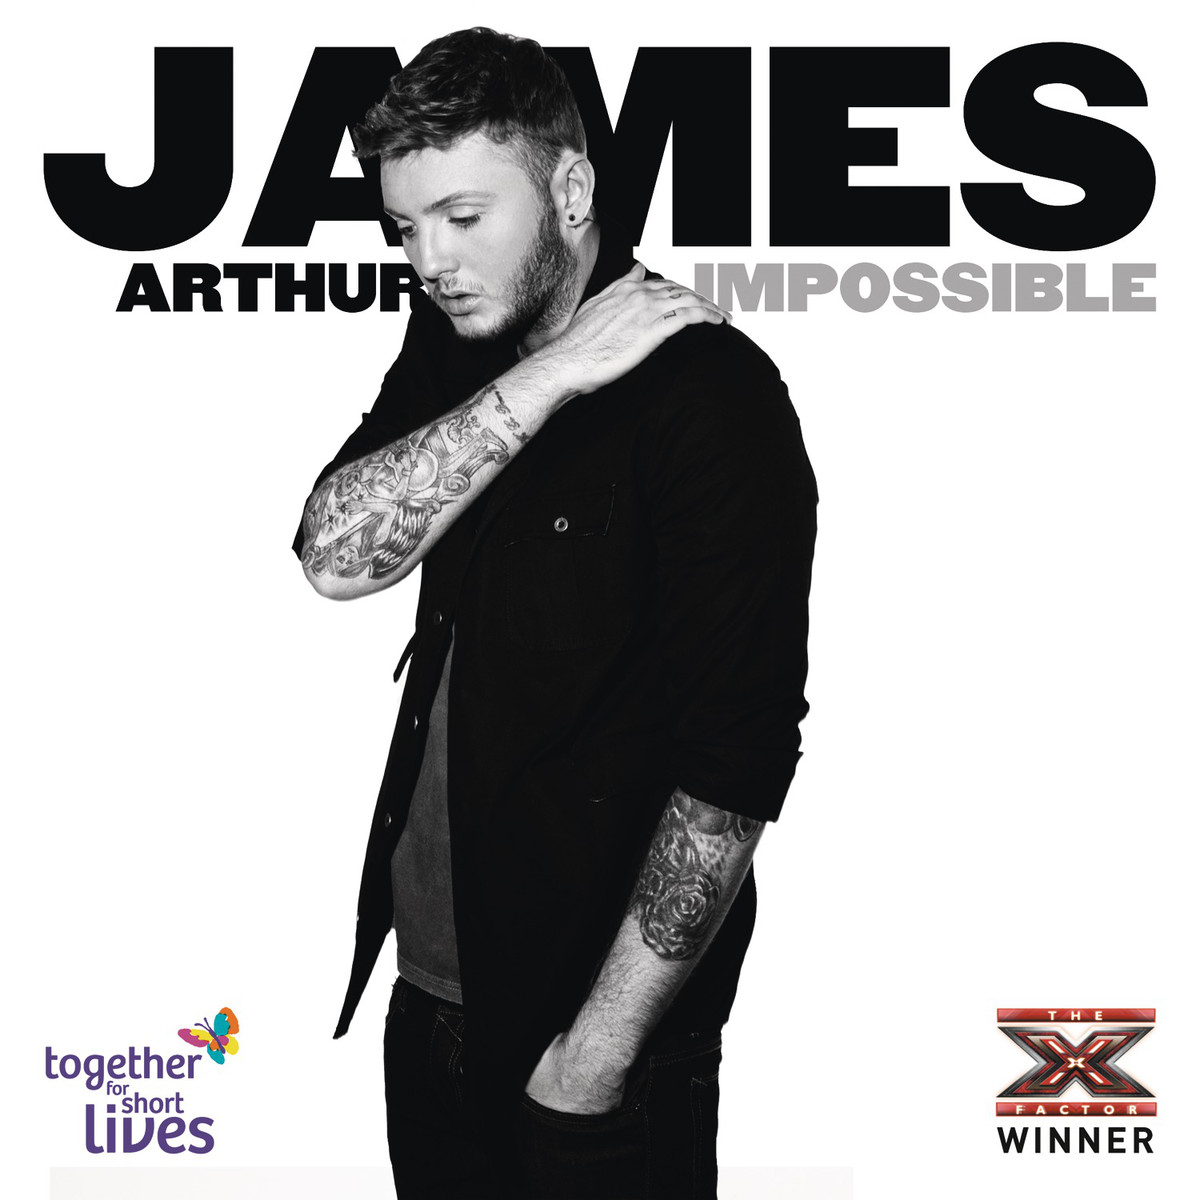 James-Arthur-Impossible-2012-1200x1200.png